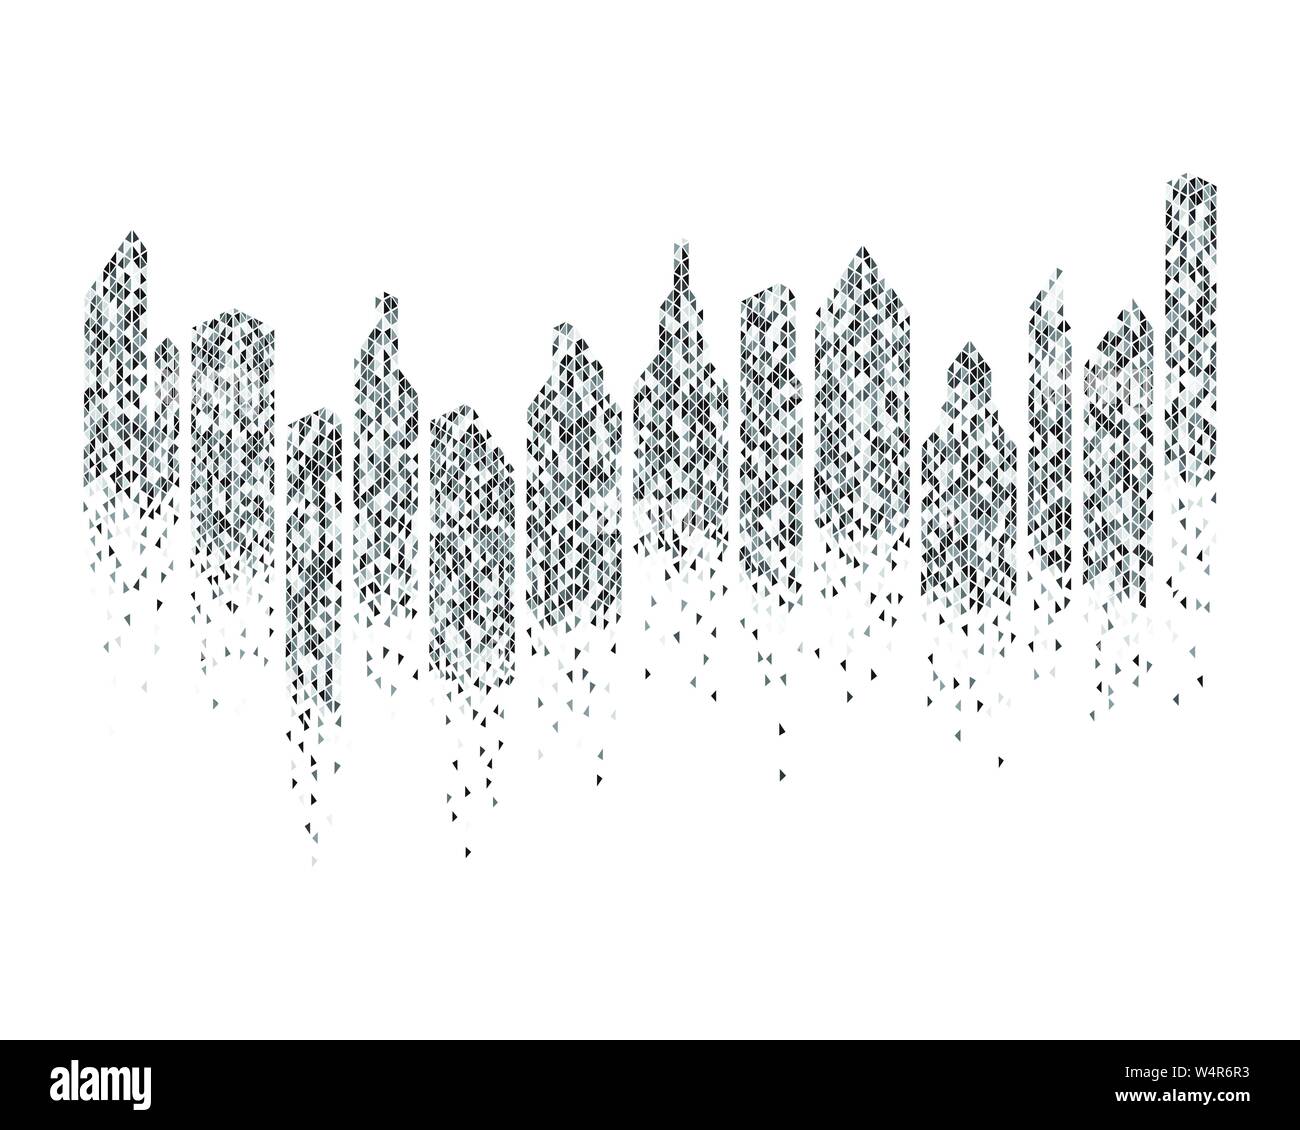 city skyline background vector illustration design Stock Vector